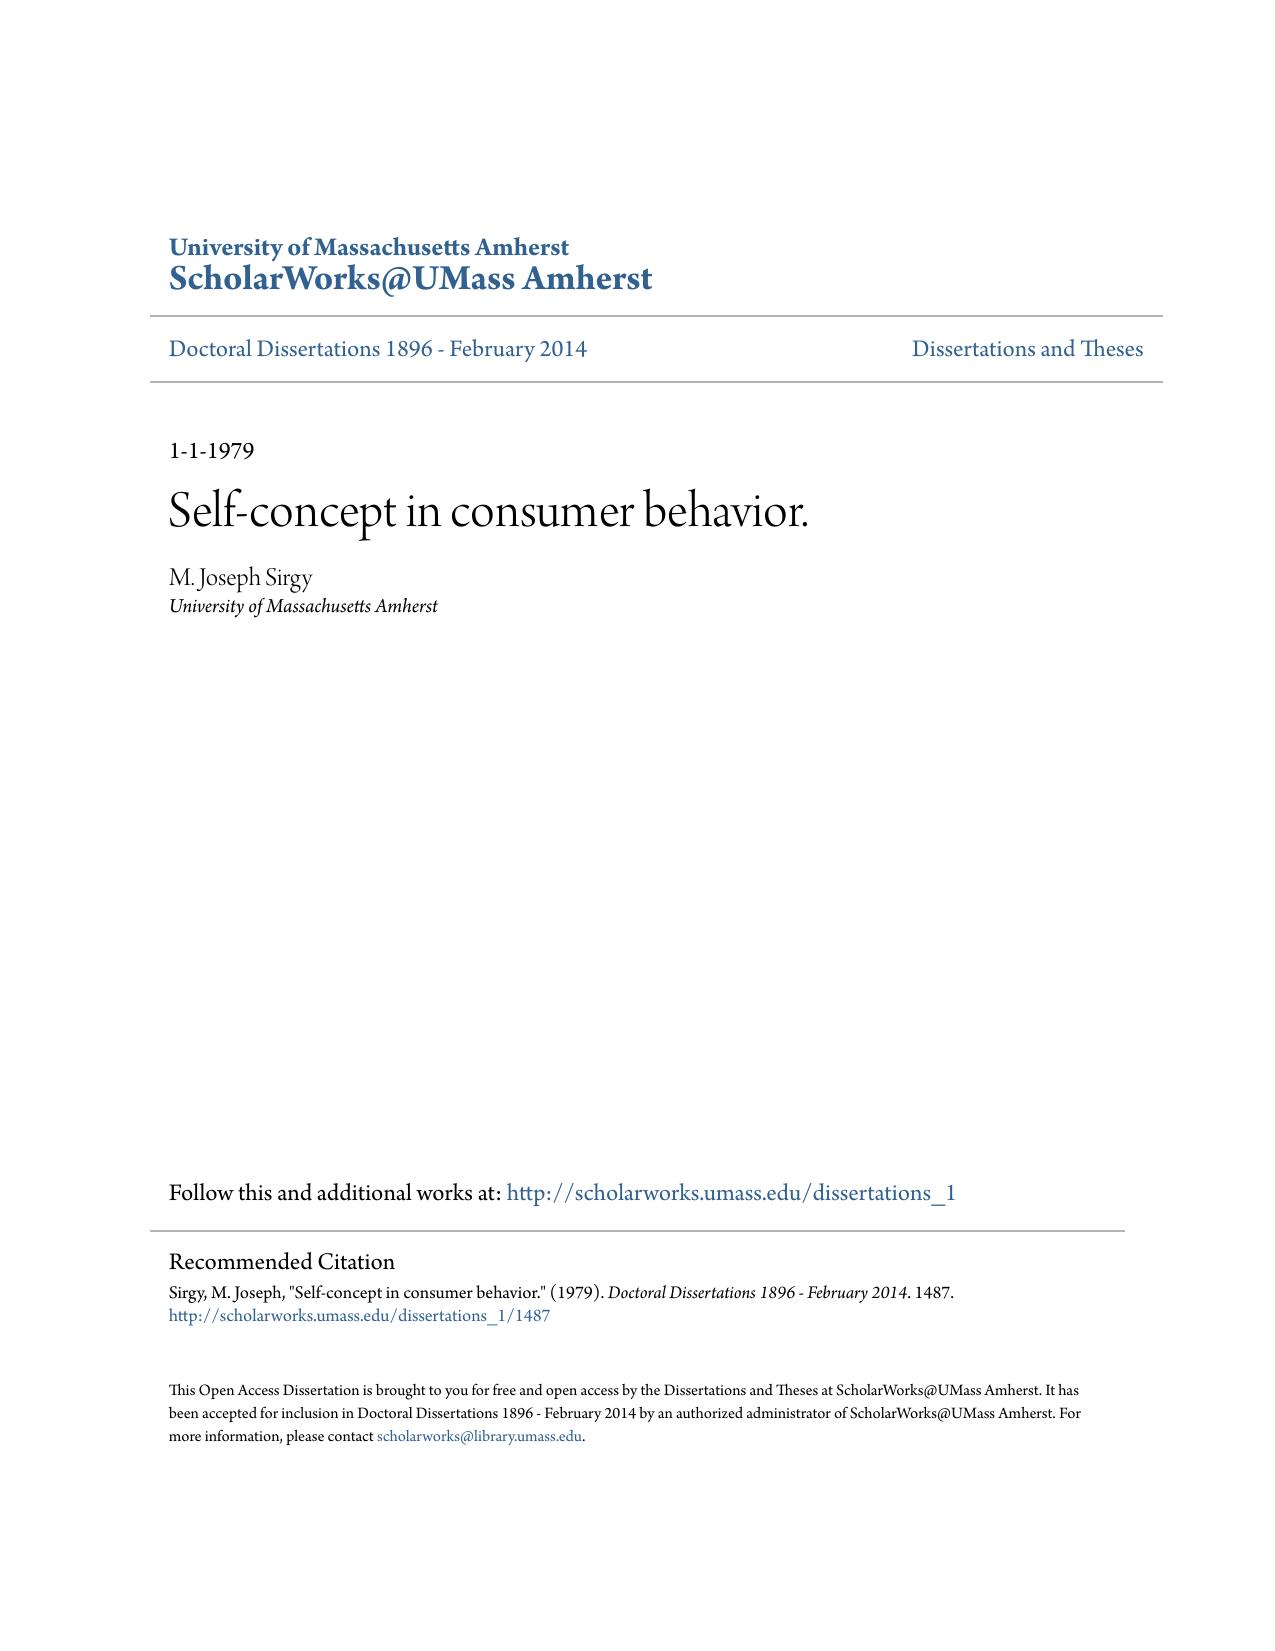 Self-concept in consumer behavior.